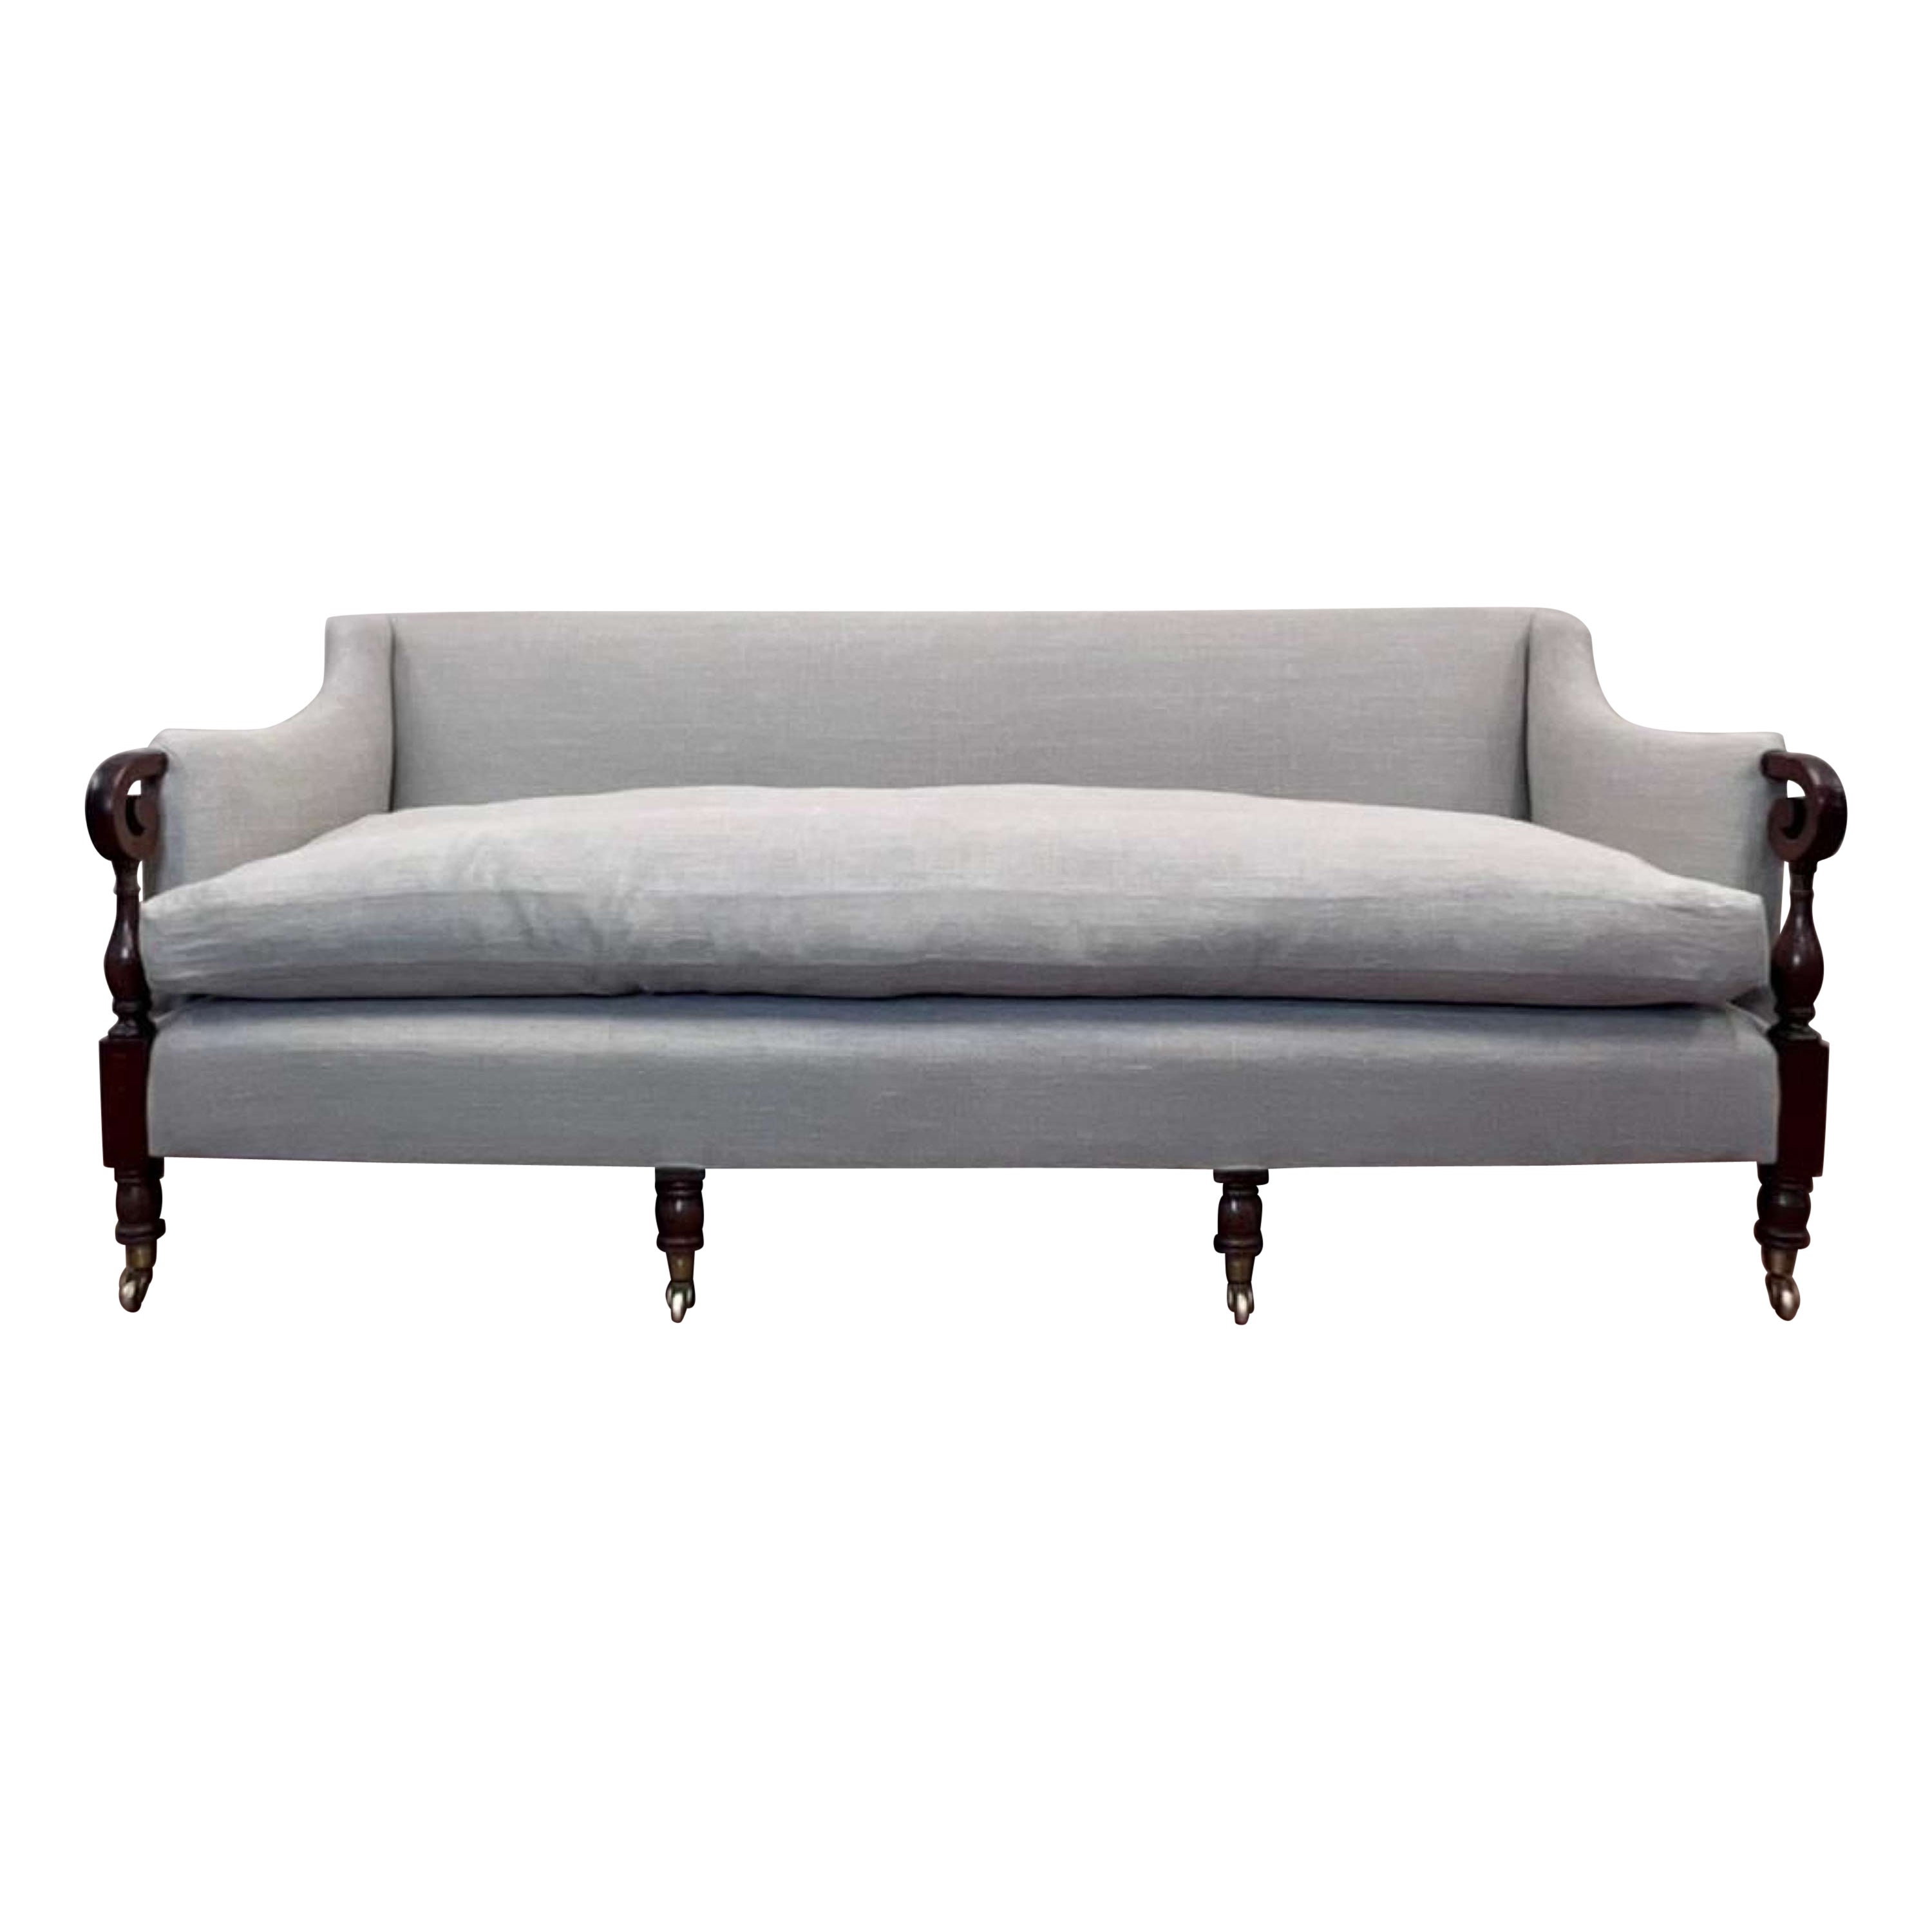 19th century linen upholstered, English  Sofa